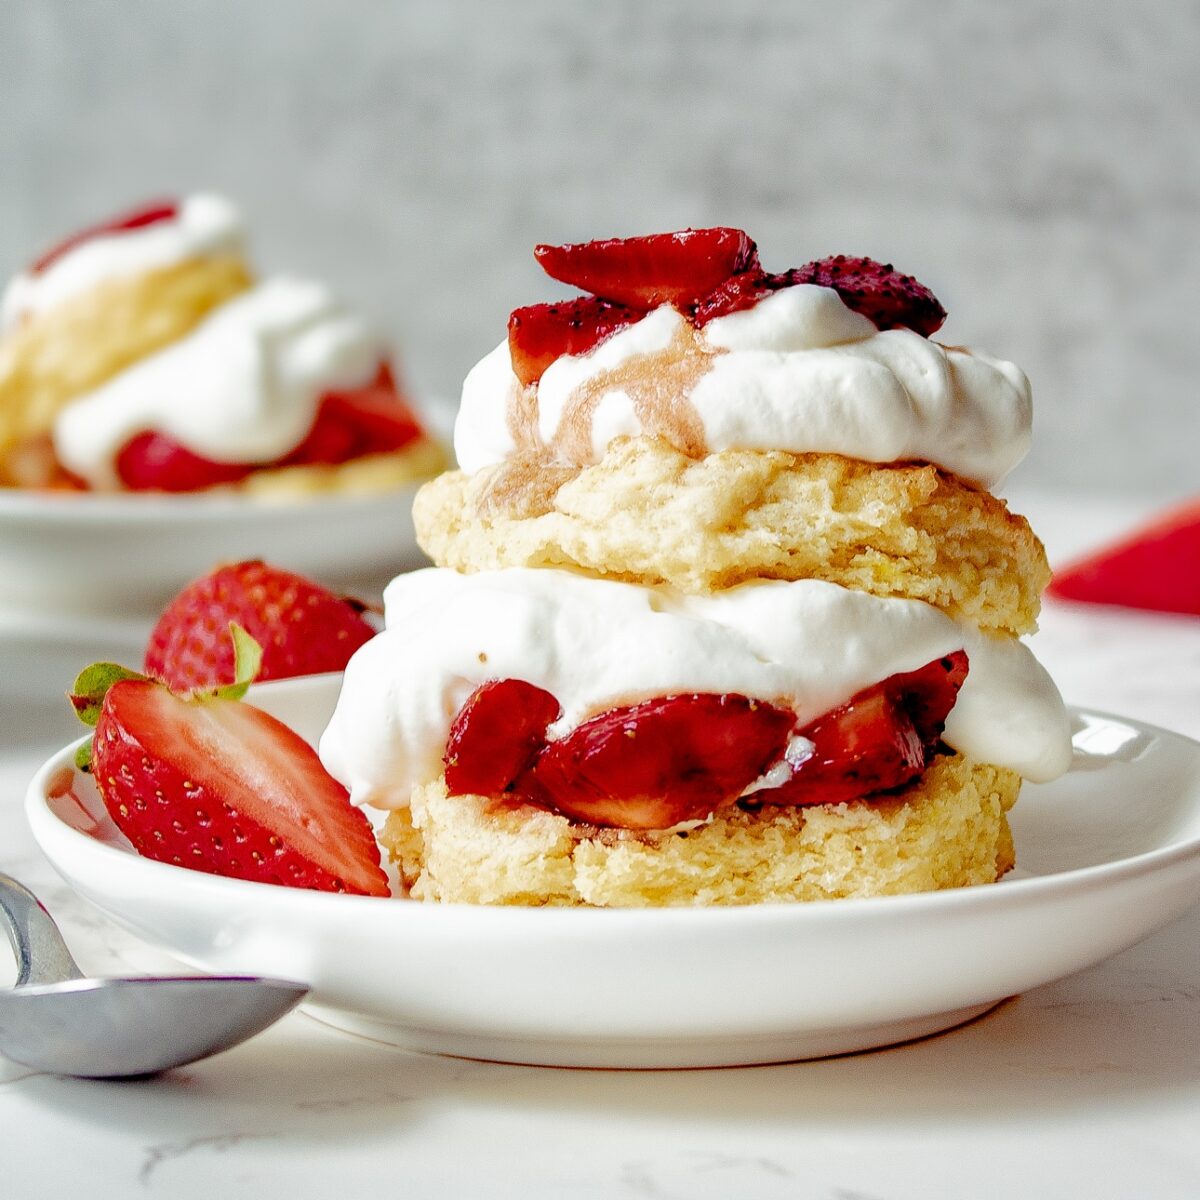 balsamic strawberry shortcake made with fresh summer berries